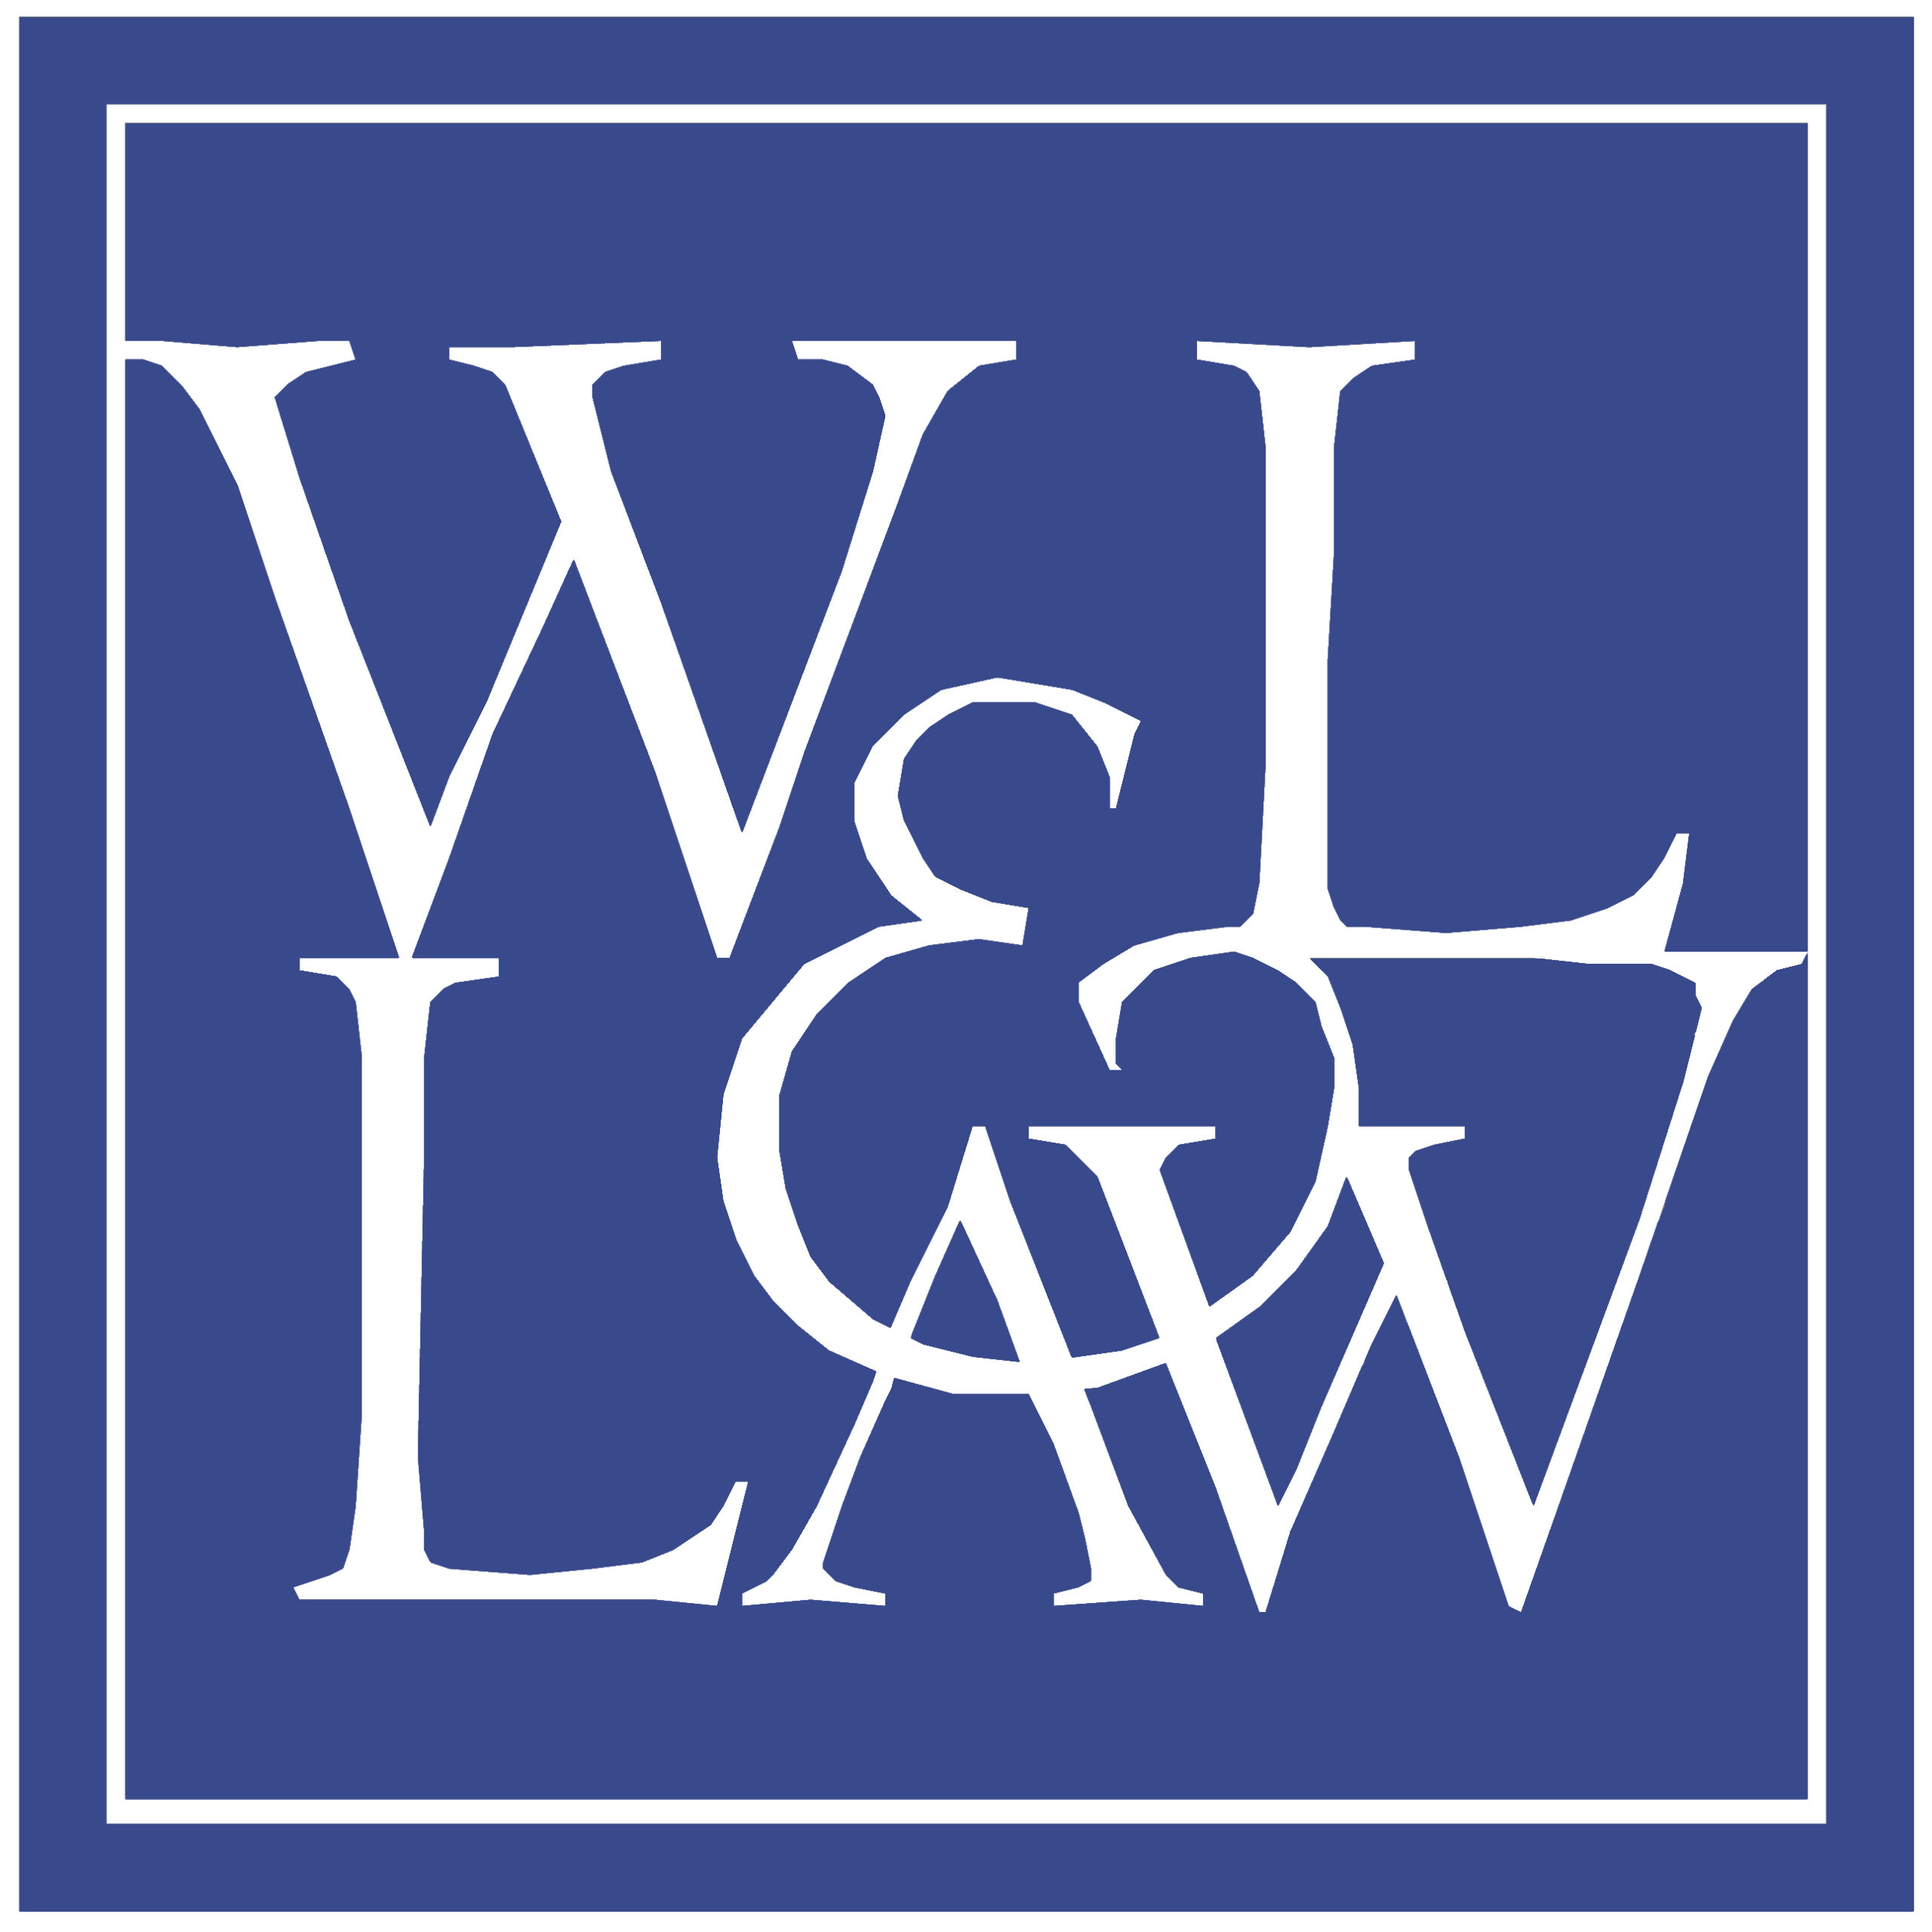 W&L Business Law Blog